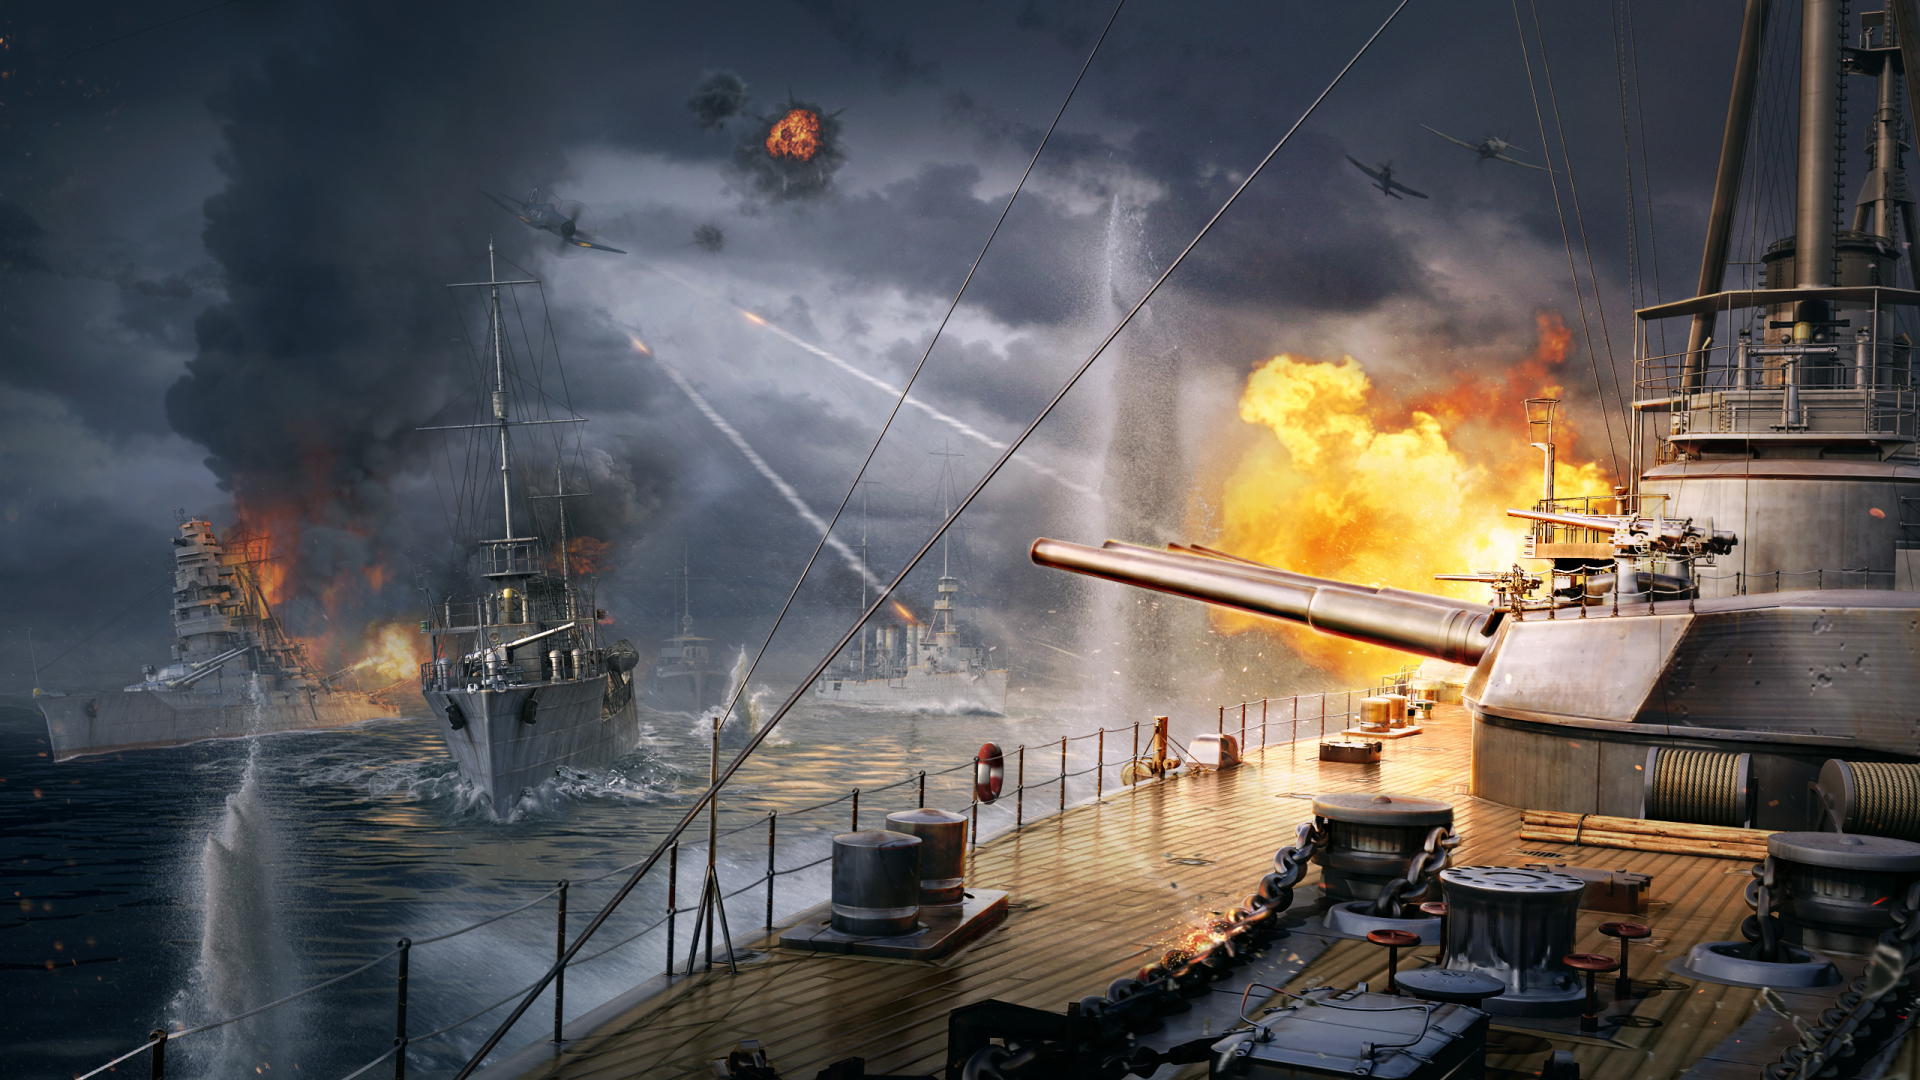 World Of Warships - HD Wallpaper 